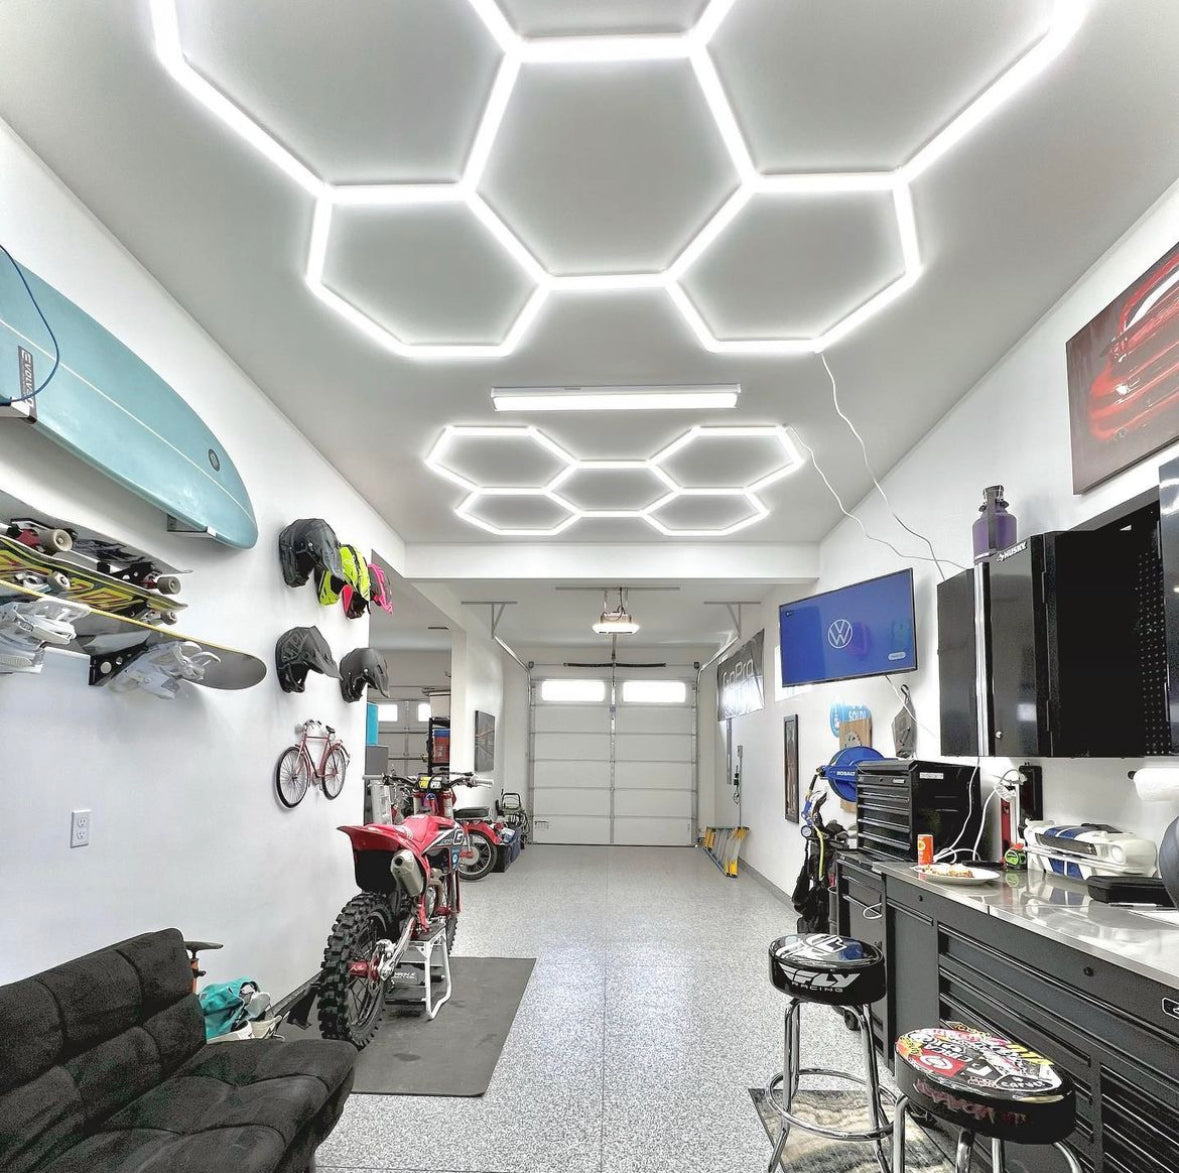 The Best Lighting for Garages 5 Hexagon LED Garage Lights